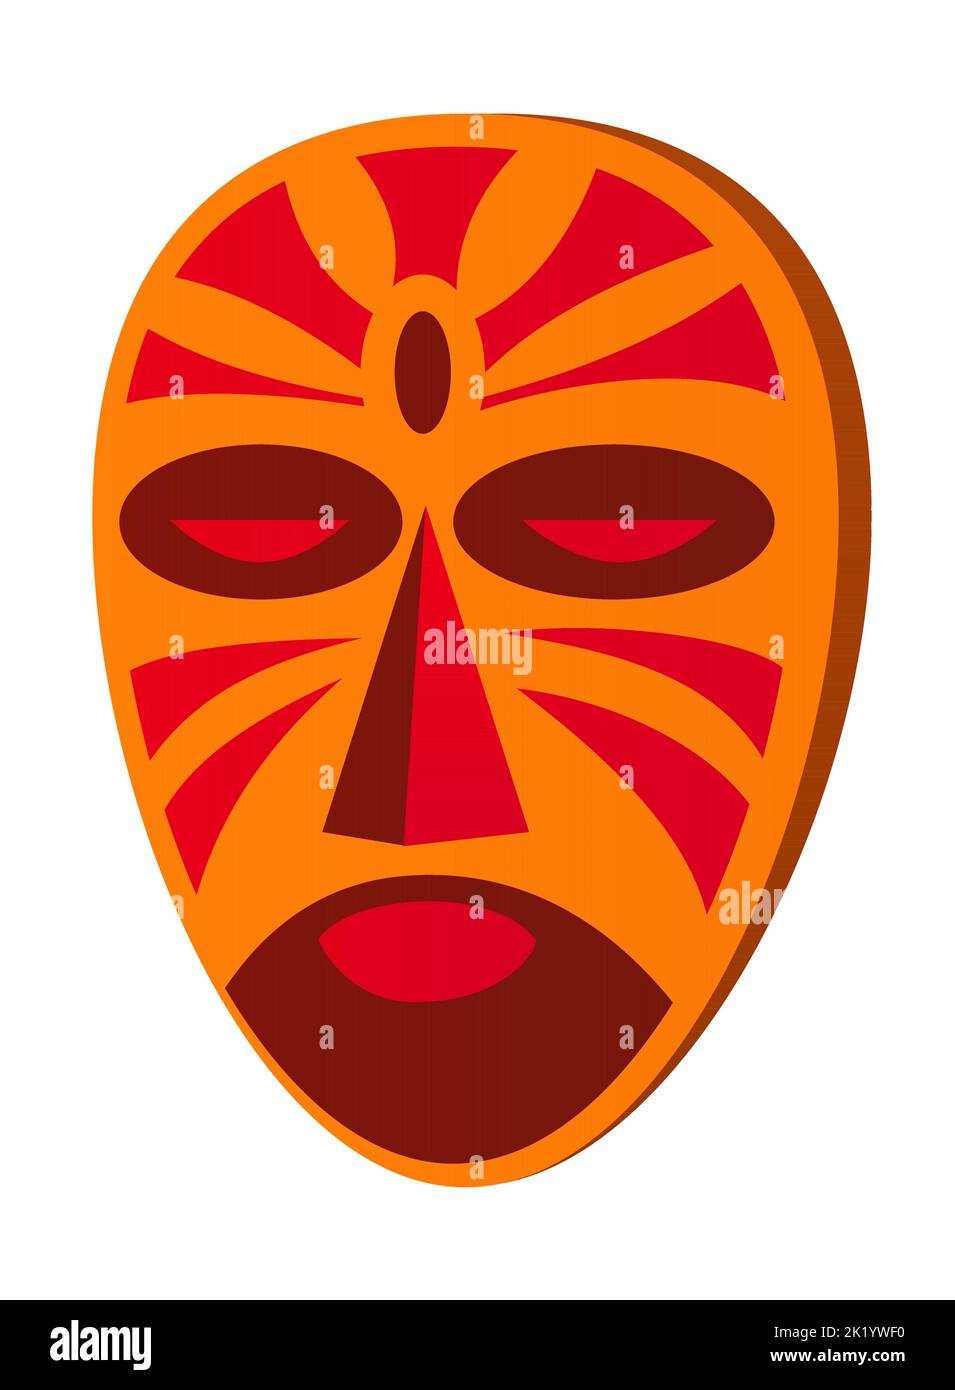 Tribal mask - modern flat design style single isolated image Stock Vector